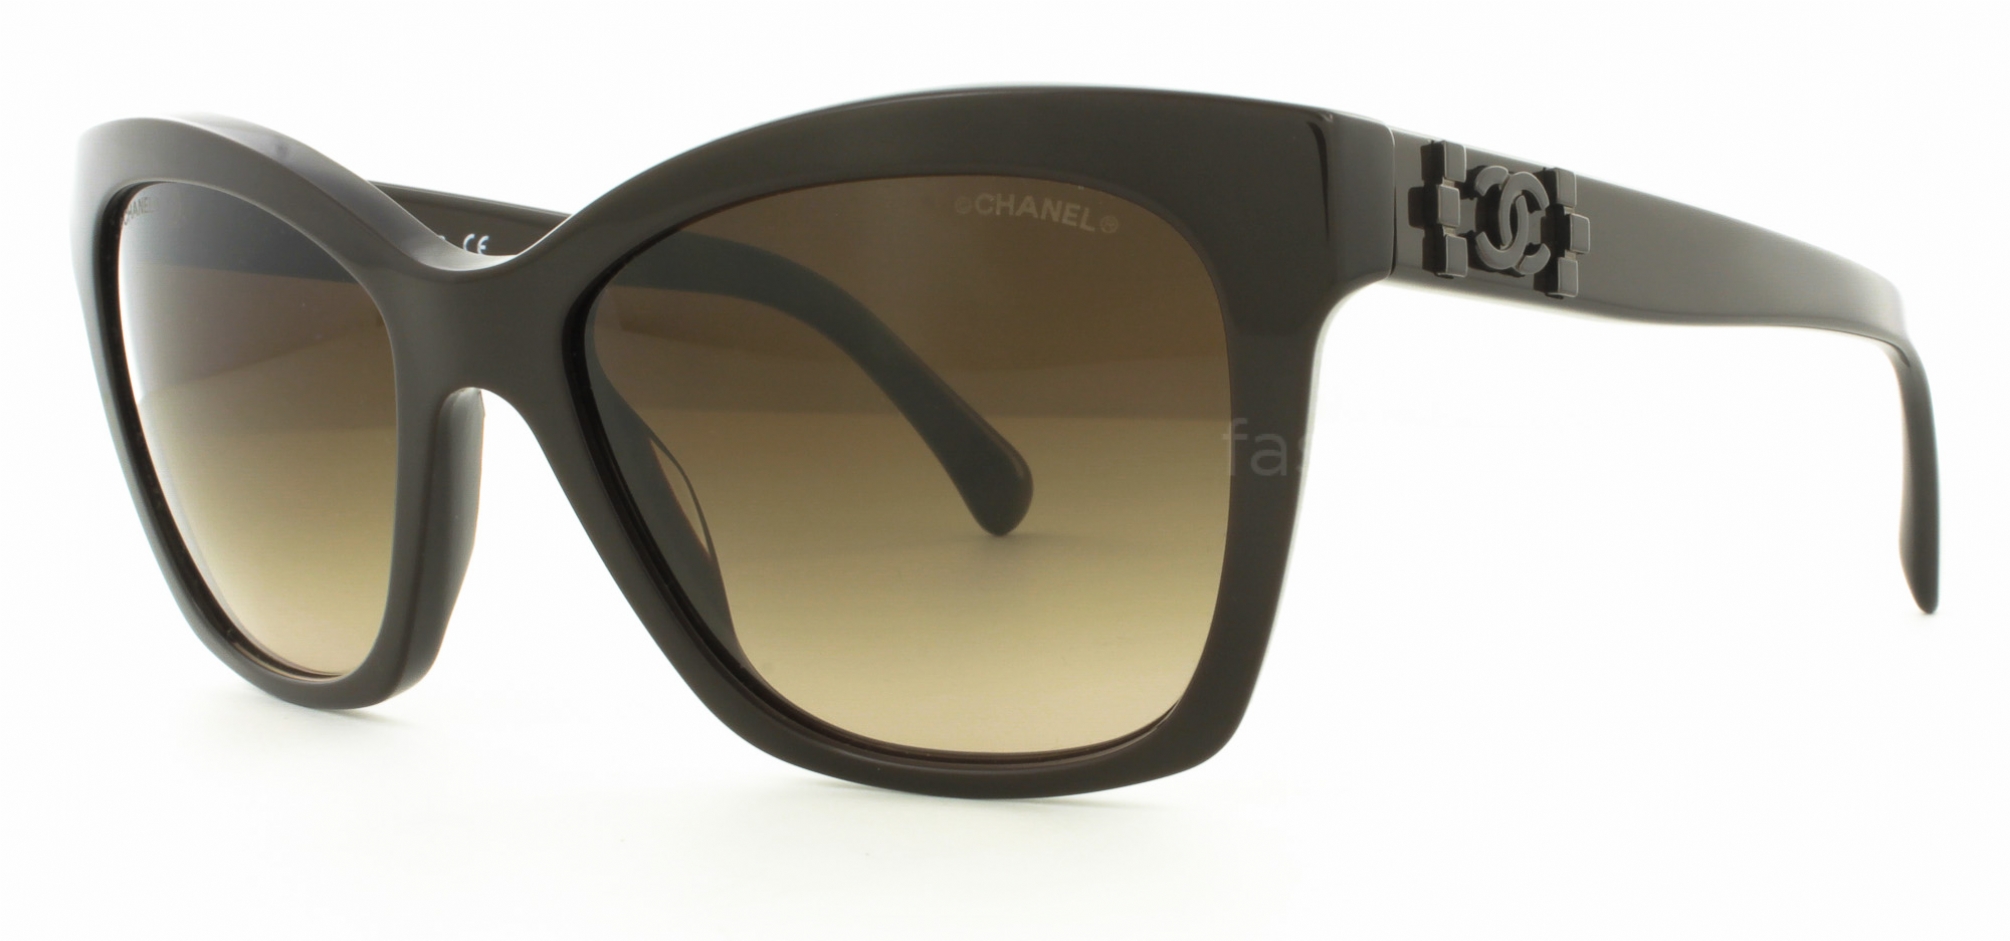 Chanel 5313 Sunglasses